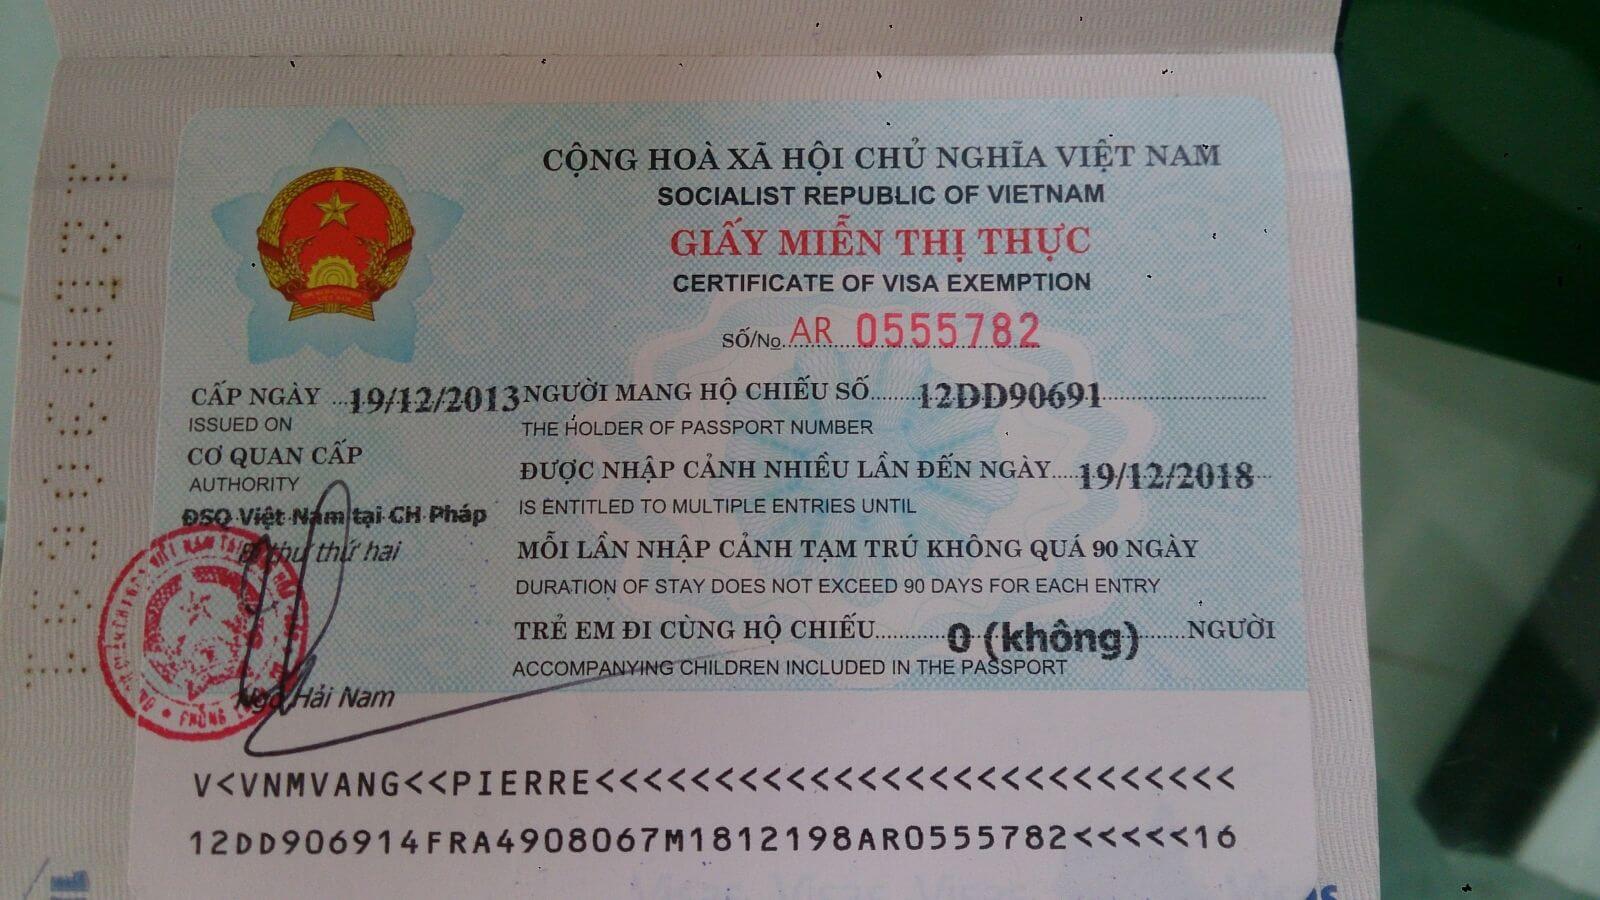 中国人入境越南免签吗？ | Vietnamimmigration.com official website | e-visa & Visa ...